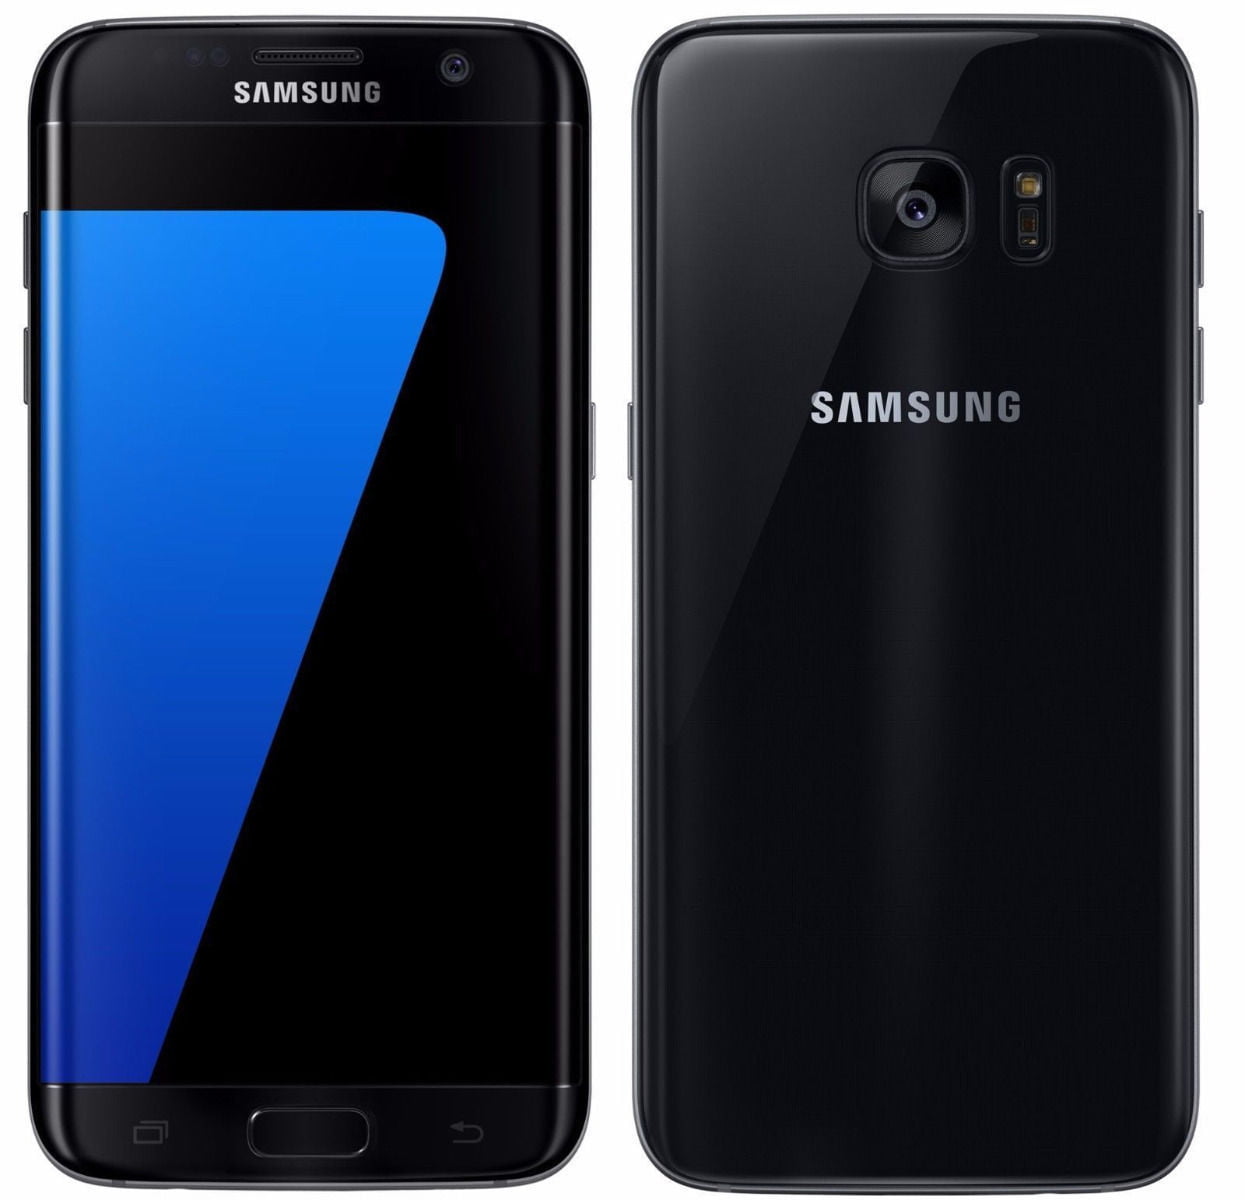 Refurbished Like New Samsung Galaxy S7 Edge 32GB SM-G935T GSM LTE Smartphone - Walmart.com